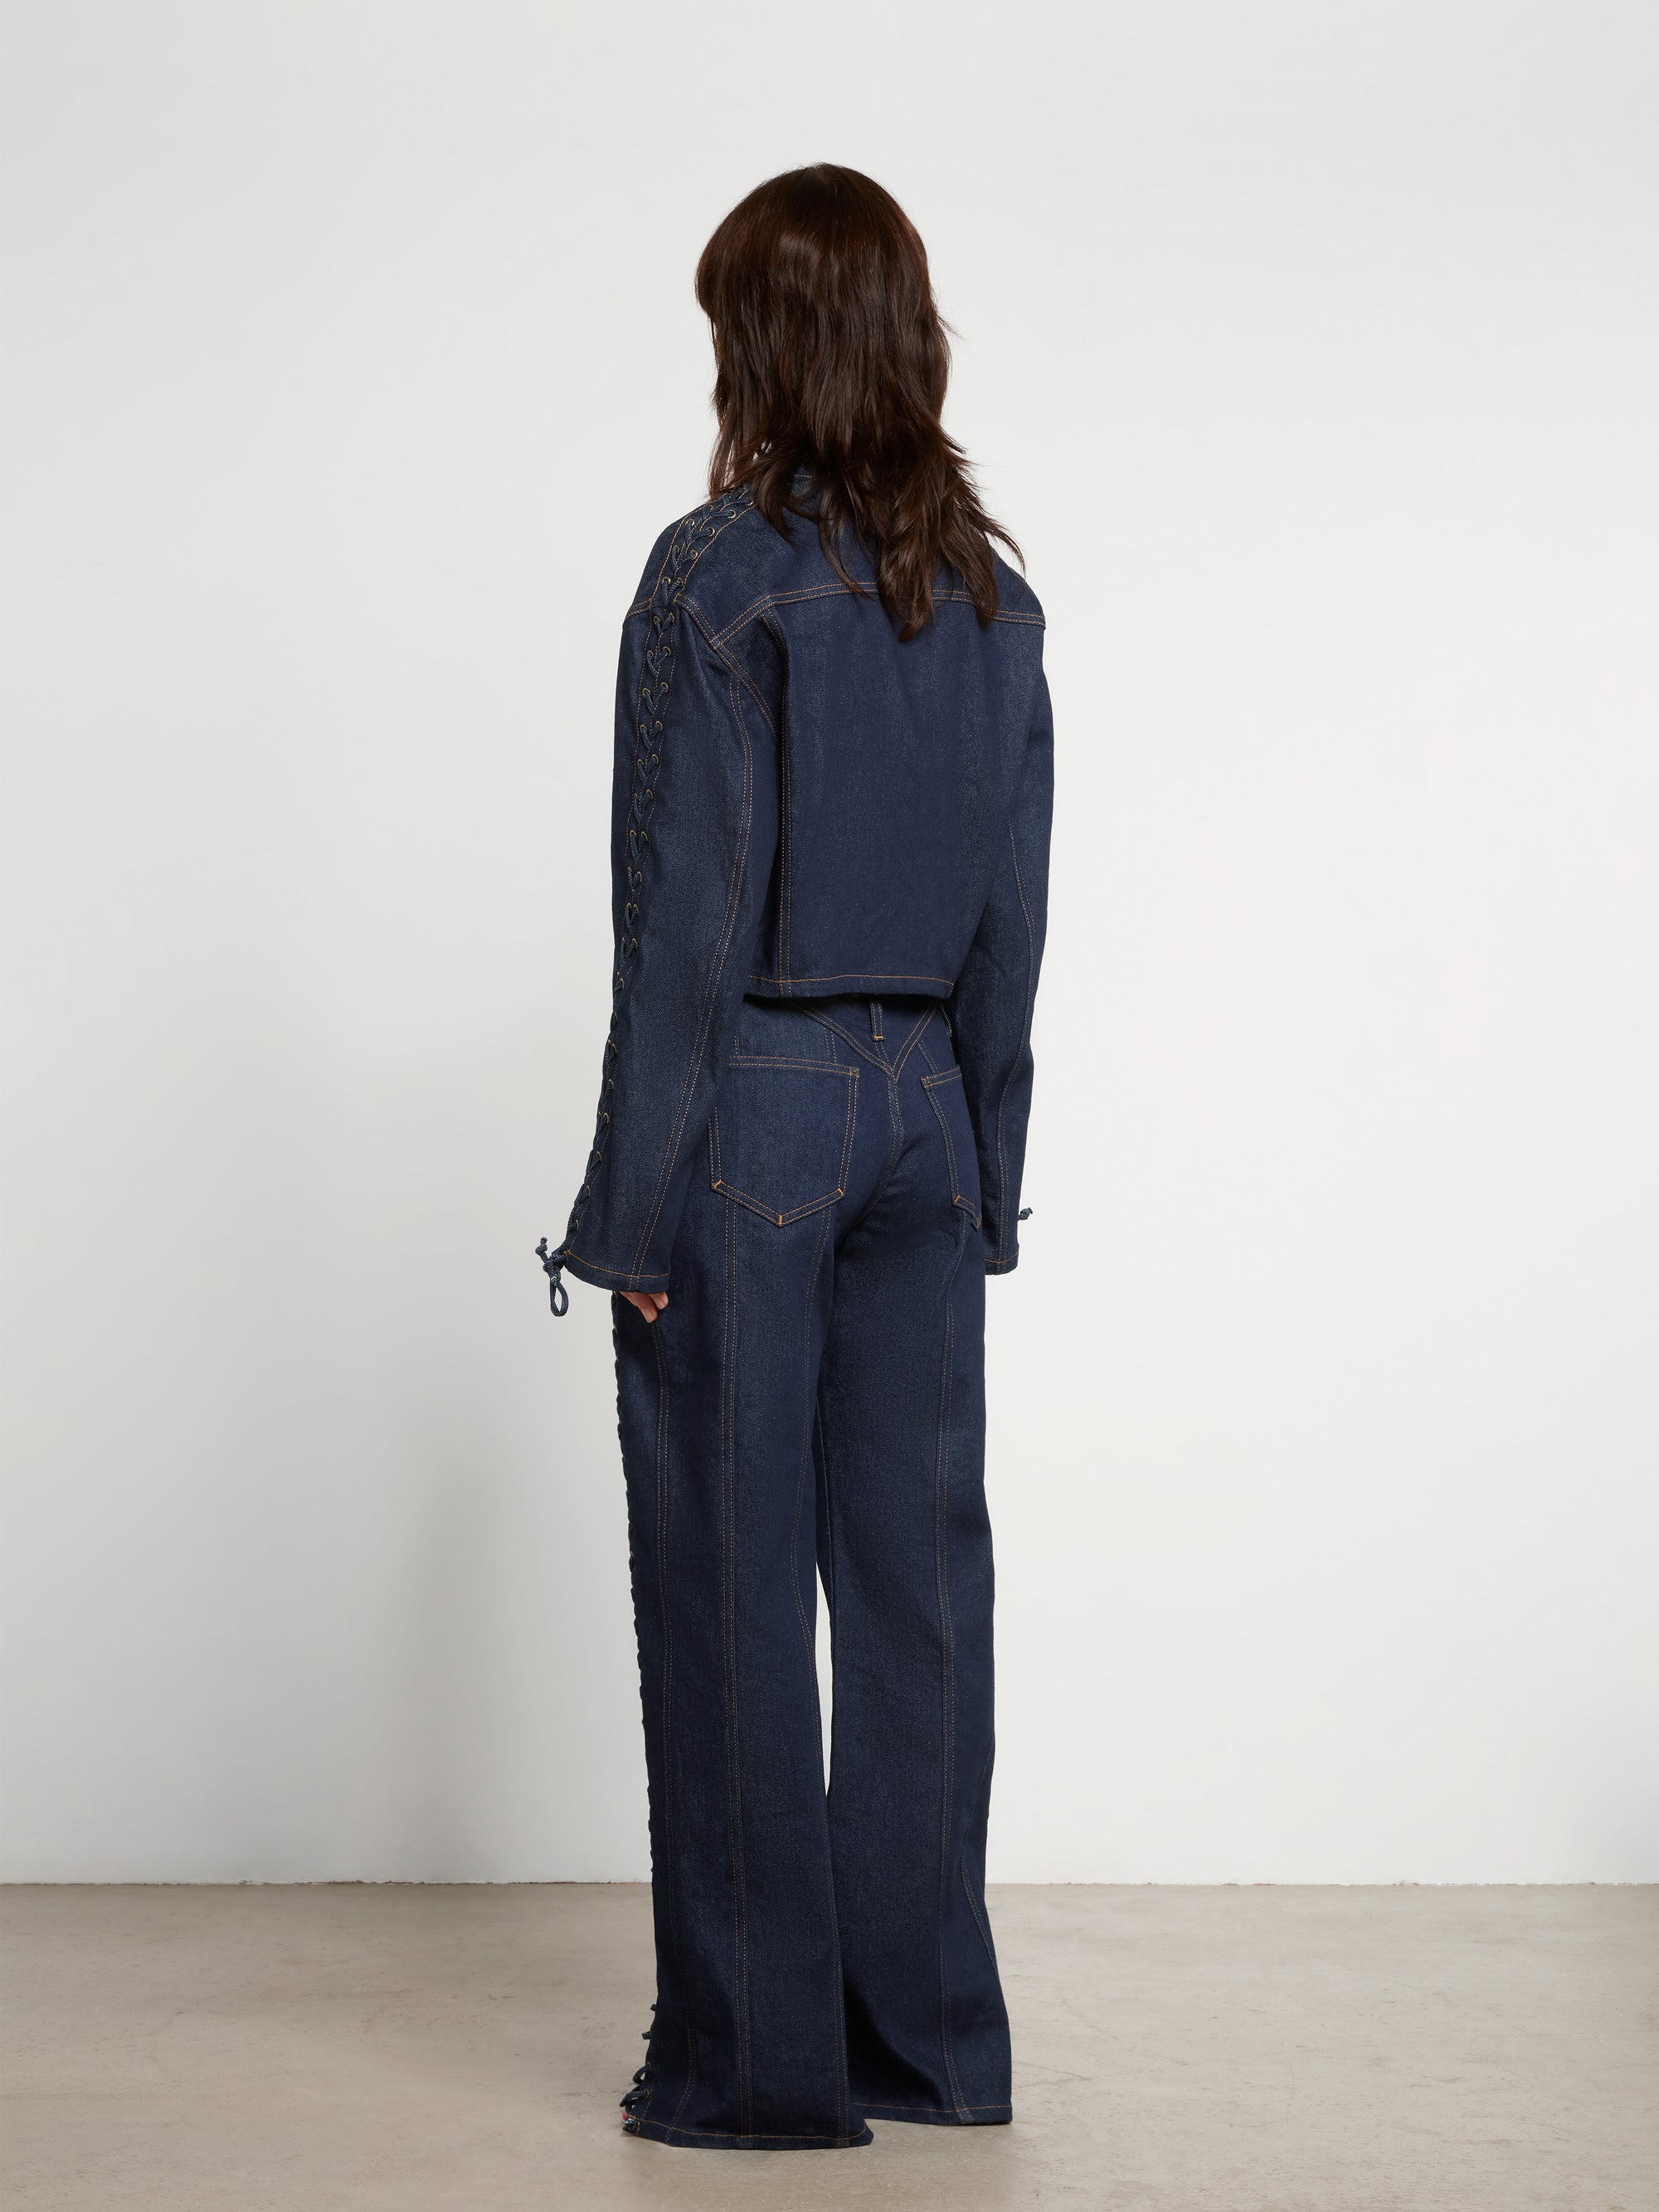 Jean Paul Gaultier - Women's Lace Up Denim Jacket - (Indigo) view 4